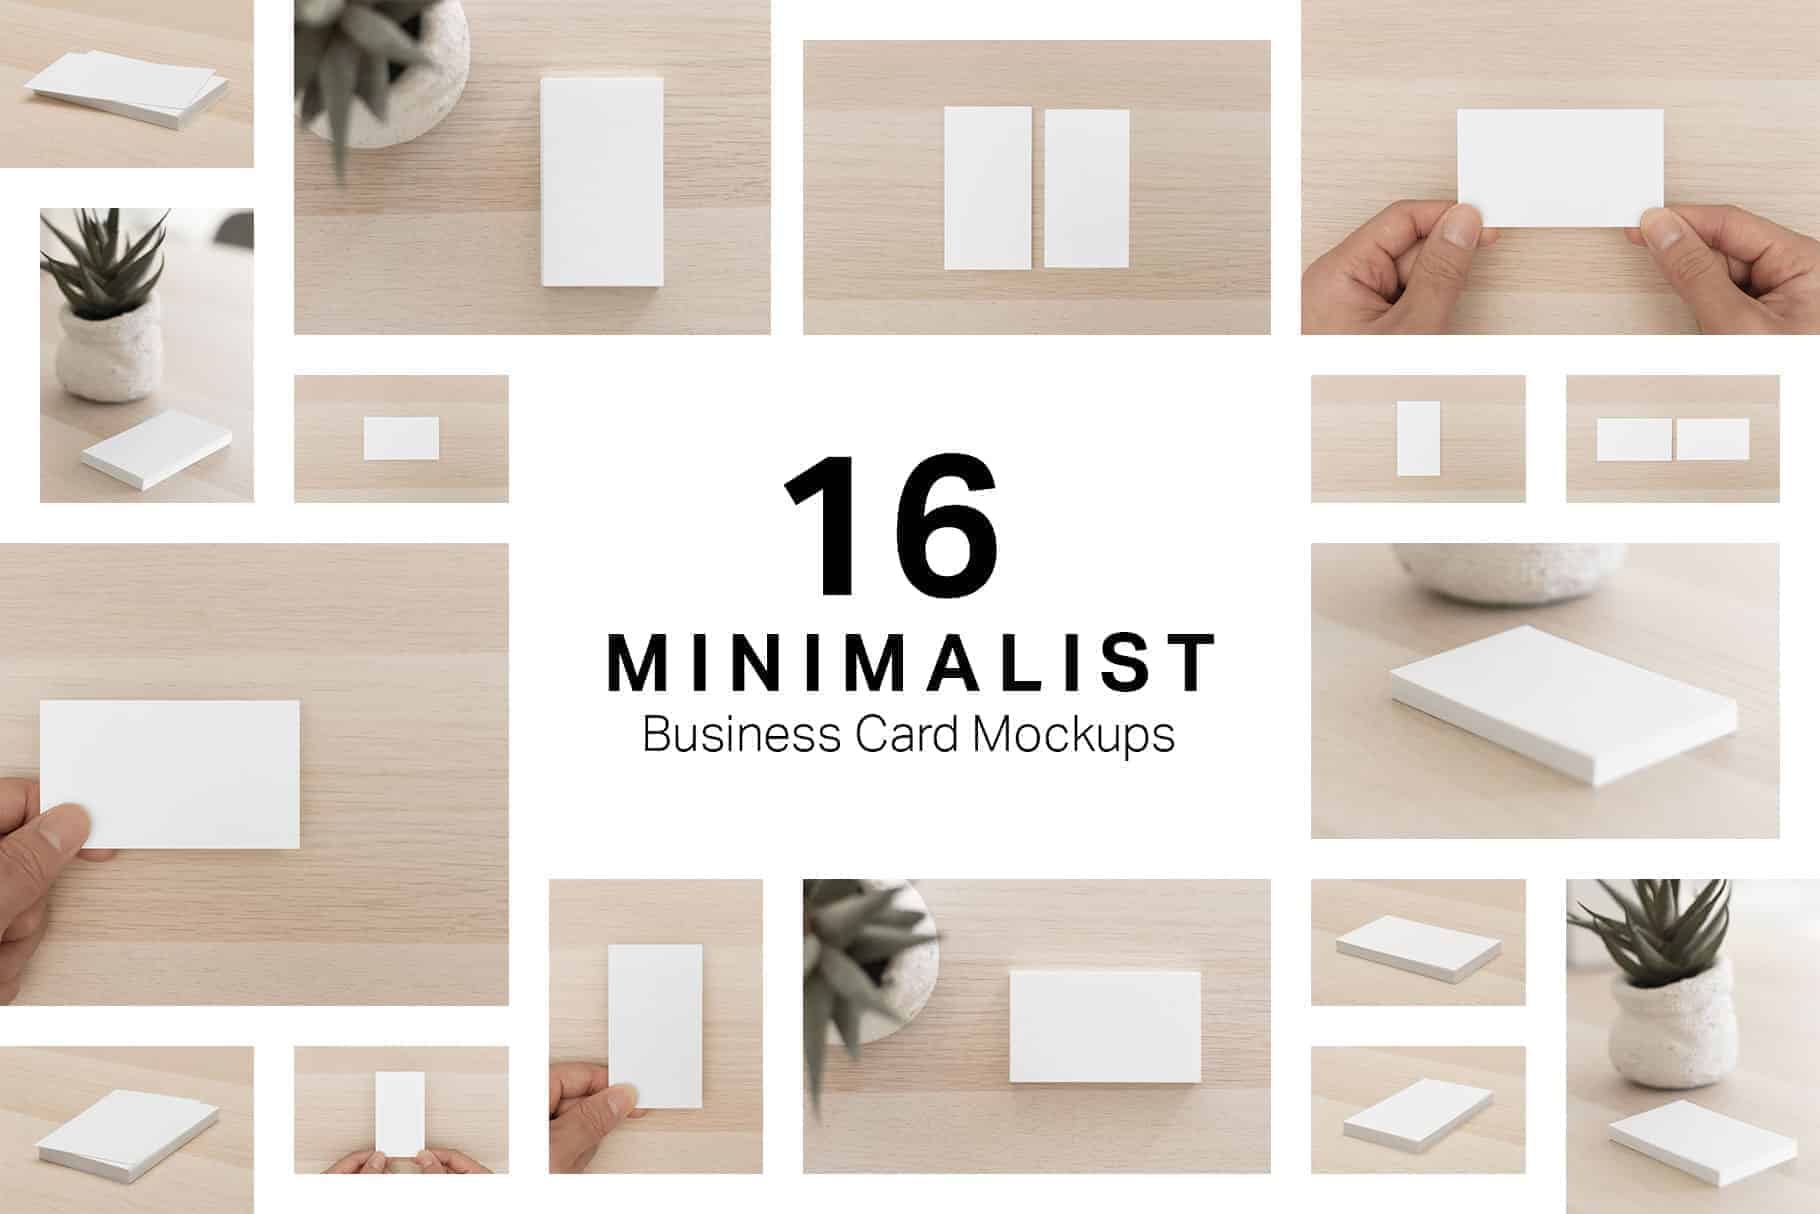 6 Minimalist Business Card Mockups for Photoshop